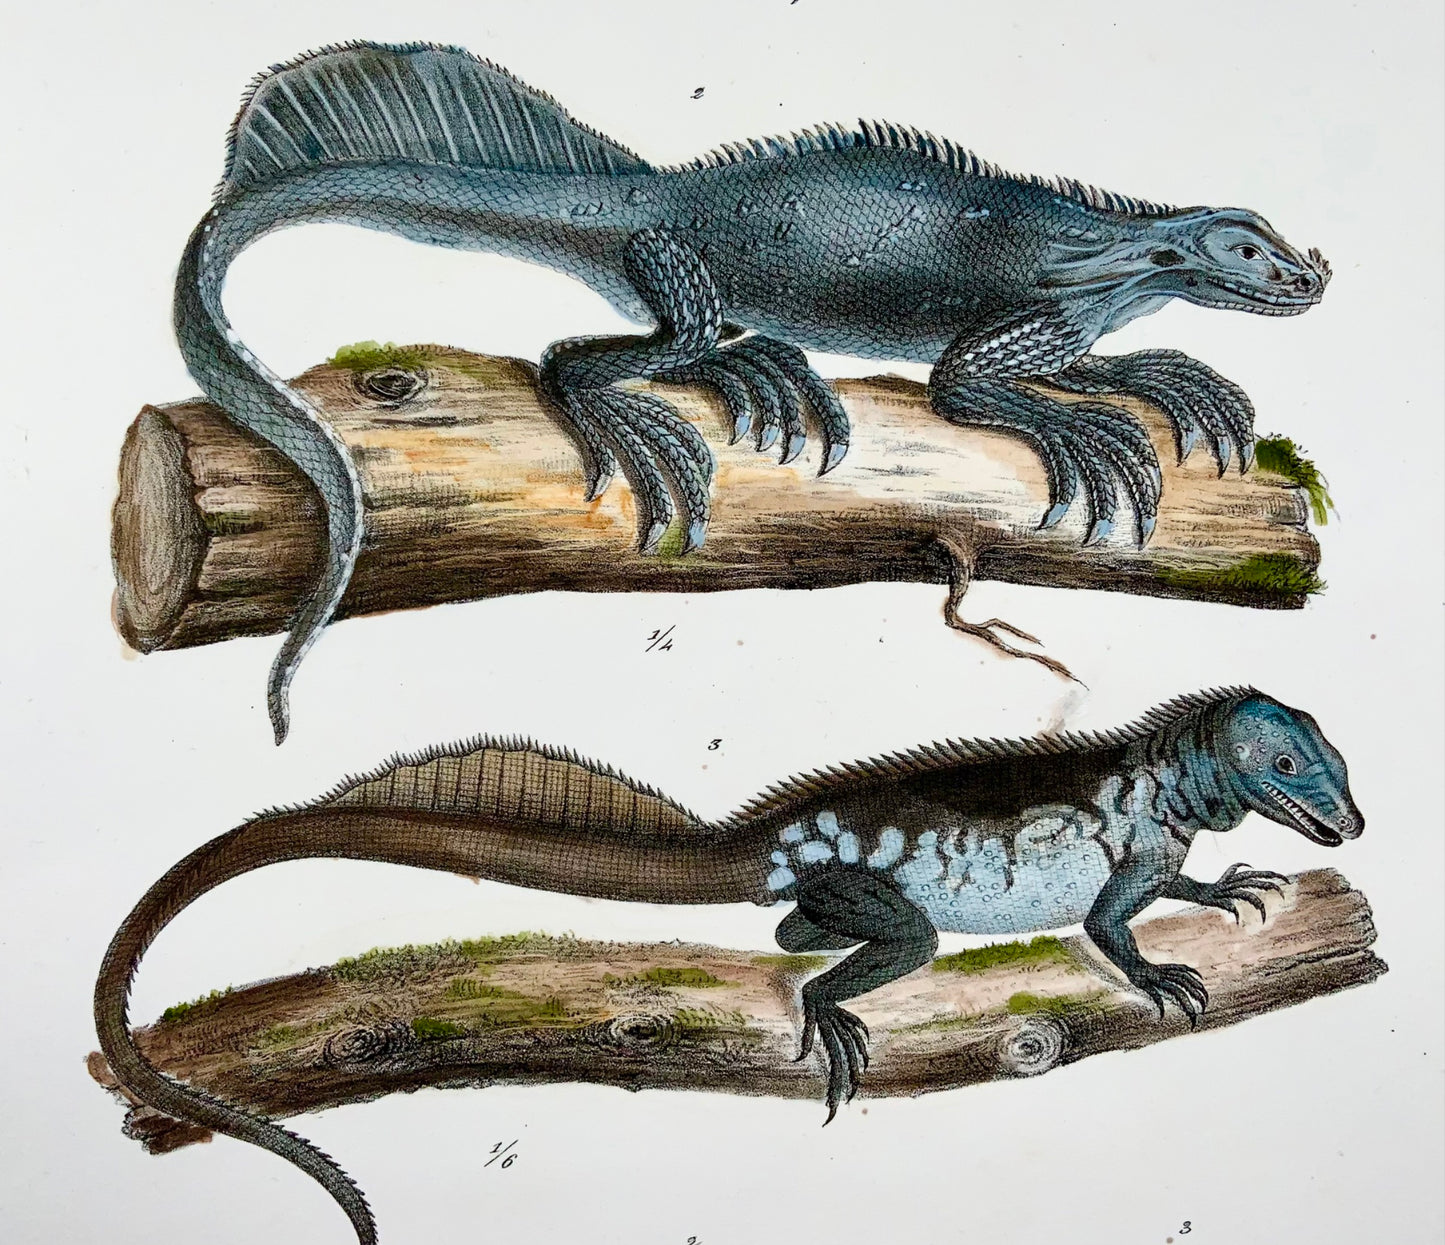 1833 Schinz (b1777) Basilisk Sailfin Lizards, hand coloured stone lithograph, reptiles